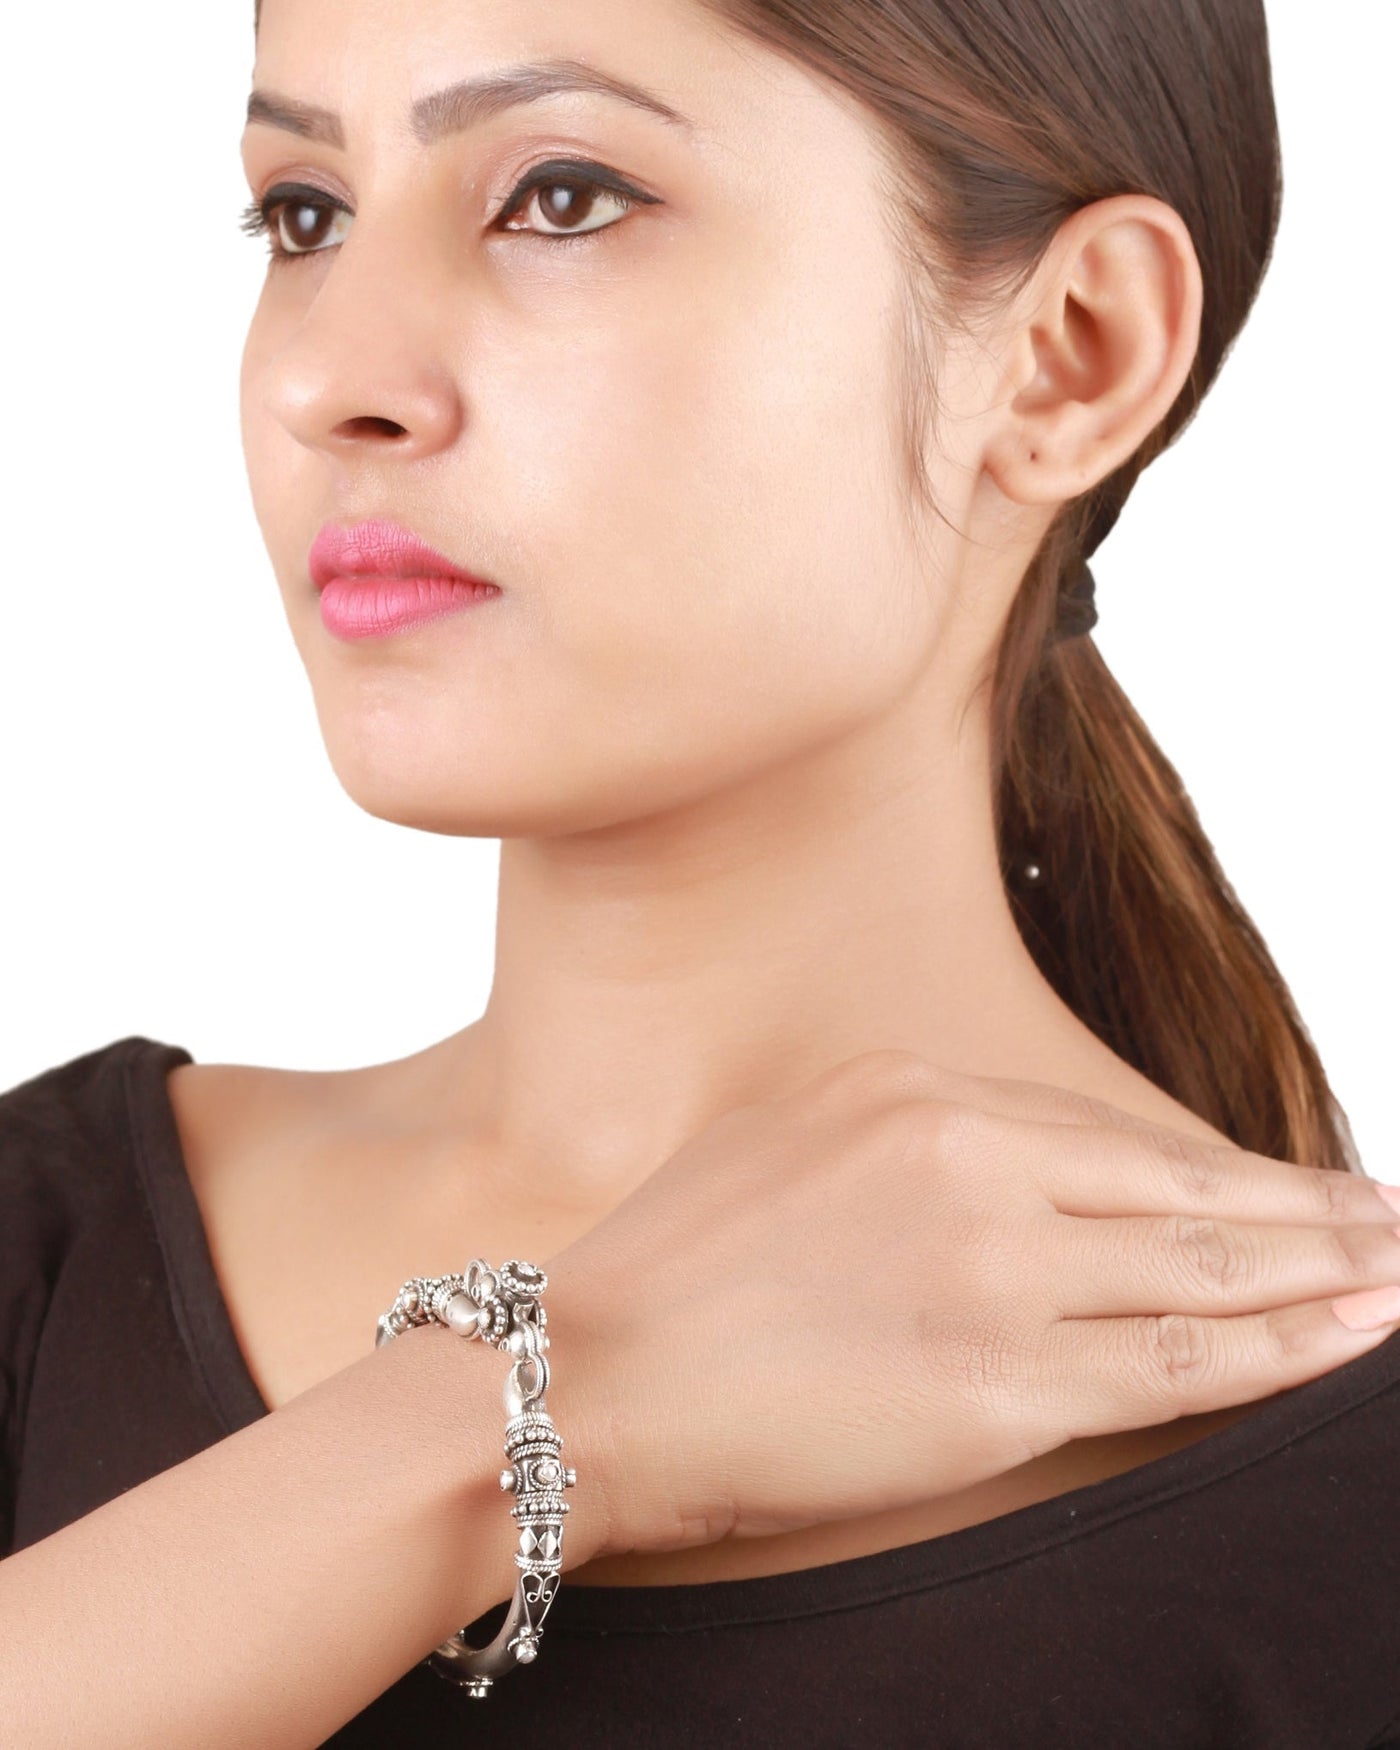 Sangeeta Boochra Silver Bracelets-Bracelets-Sangeeta Boochra